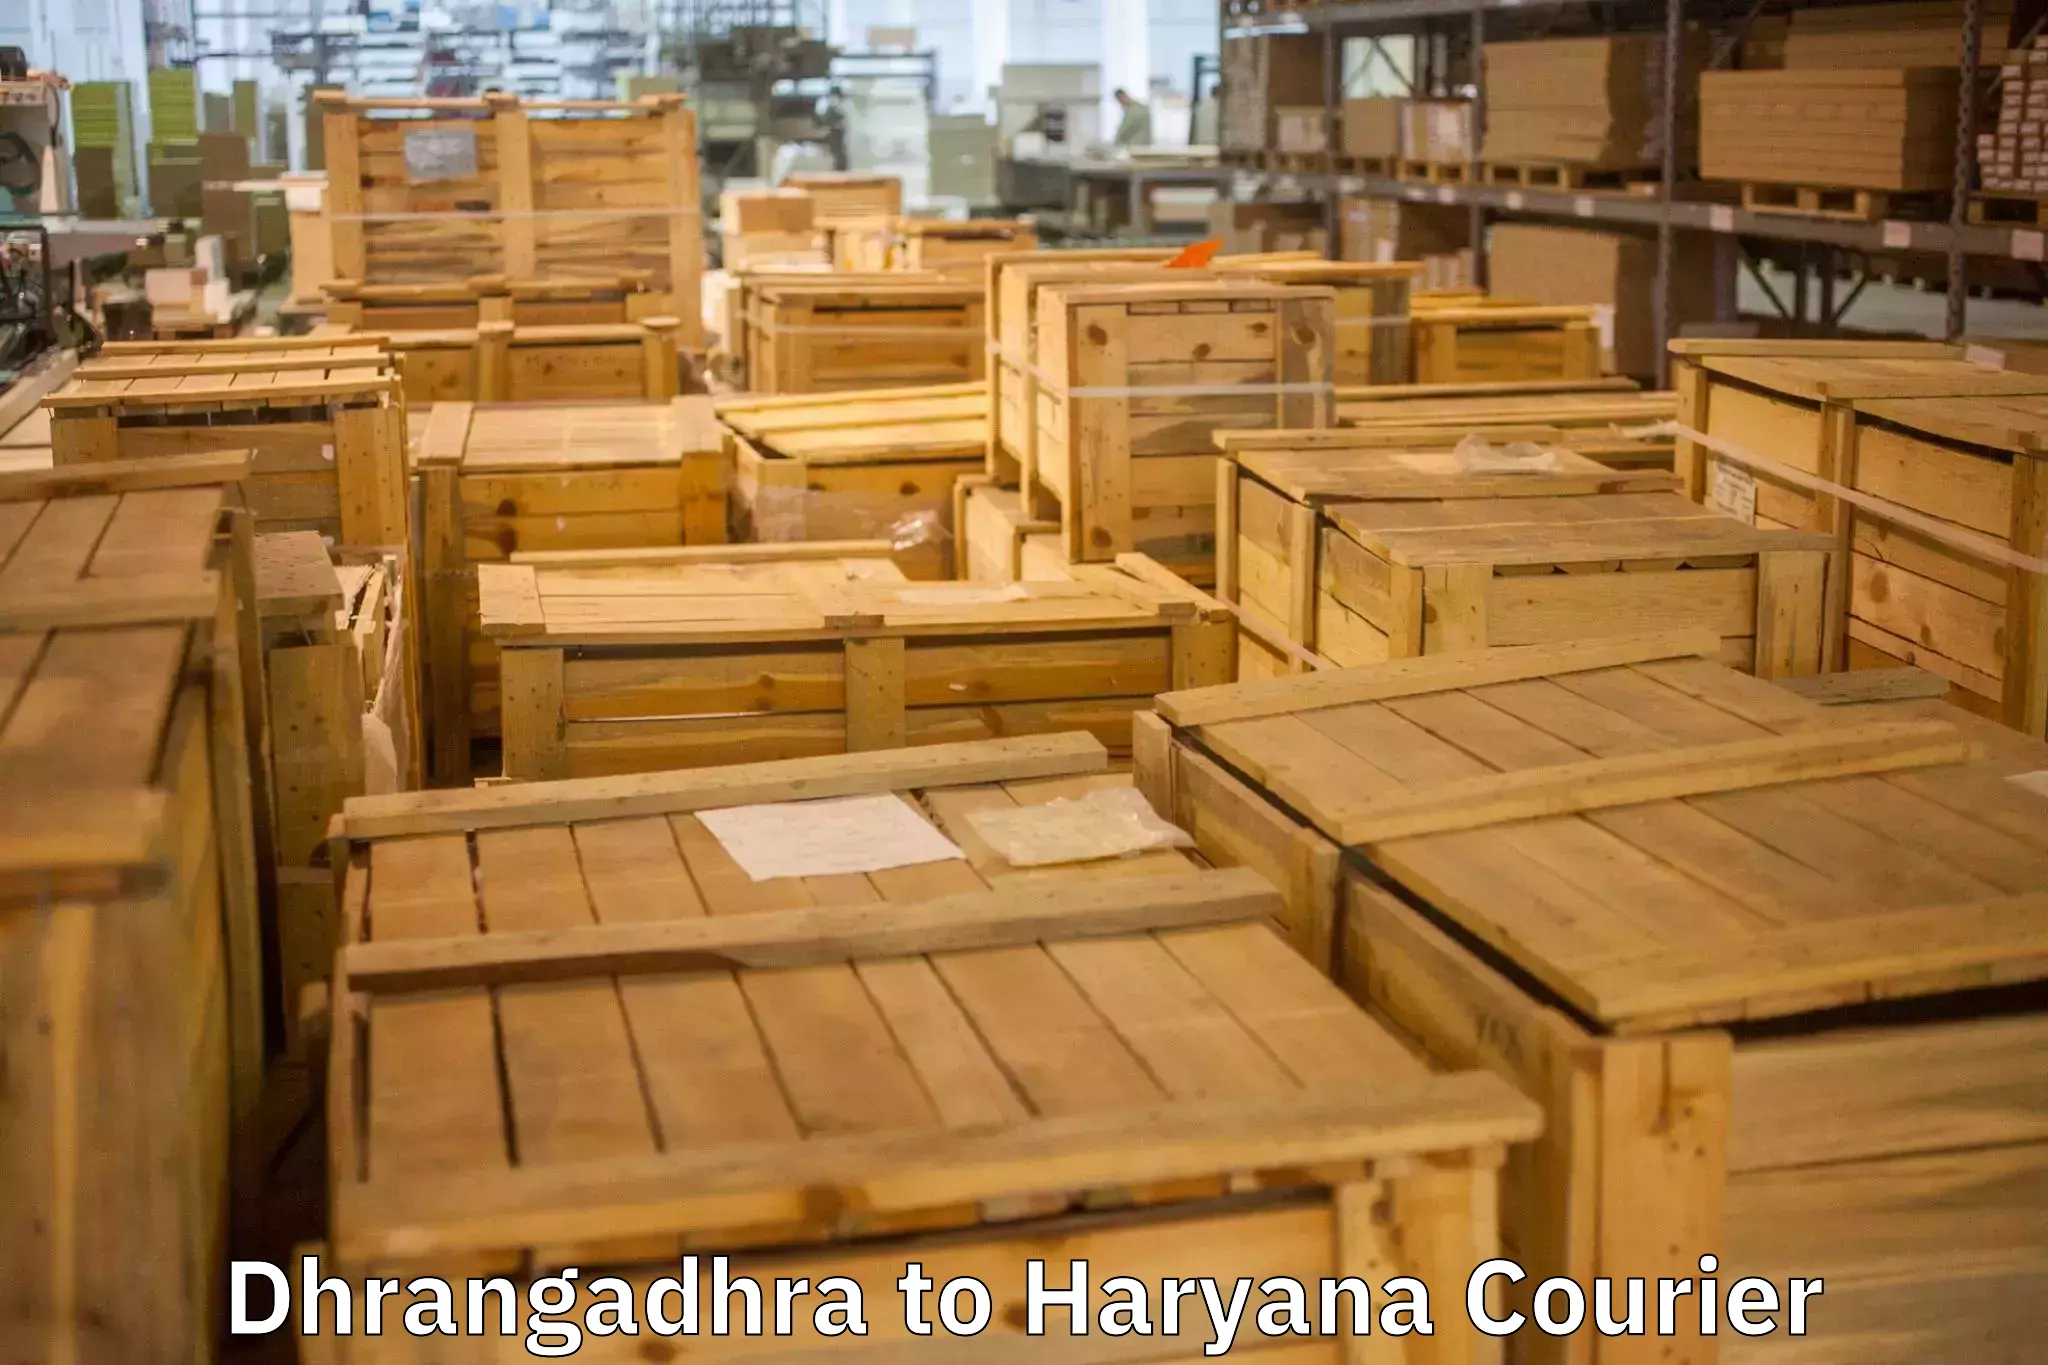 Professional movers Dhrangadhra to Haryana